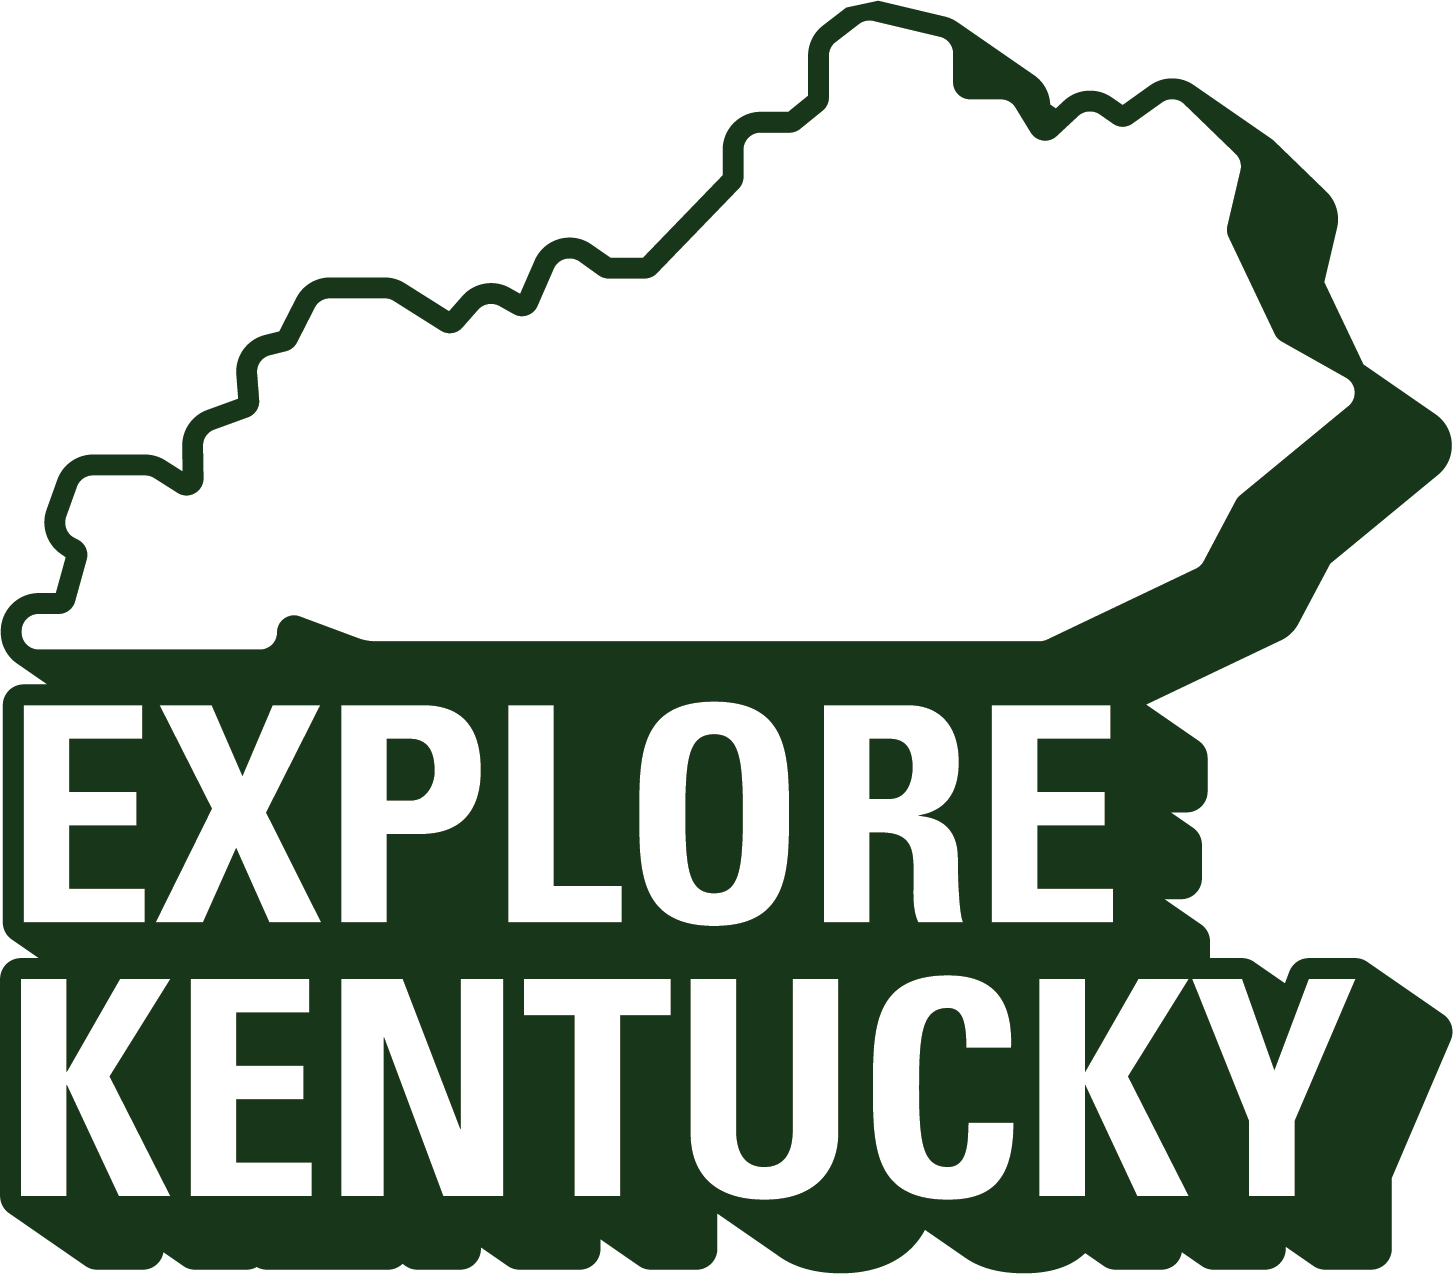  Explore Kentucky Initiative 